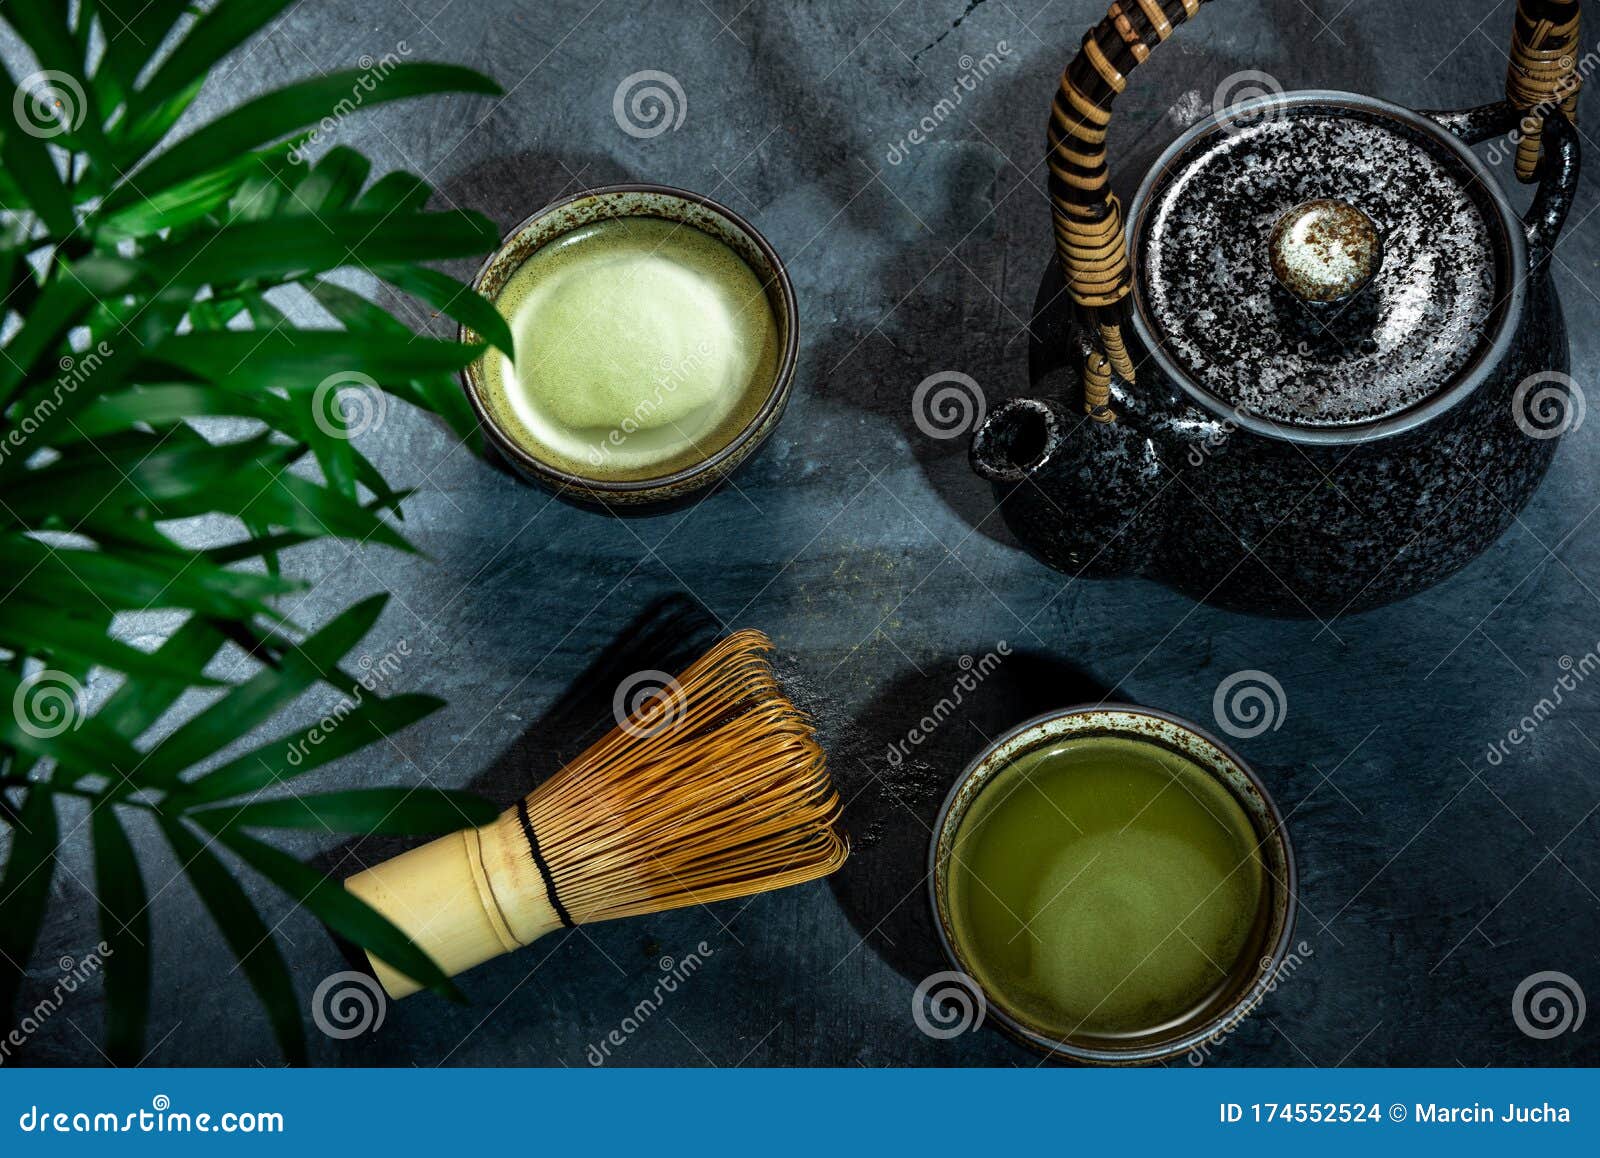 green matcha tea drinking ceremony